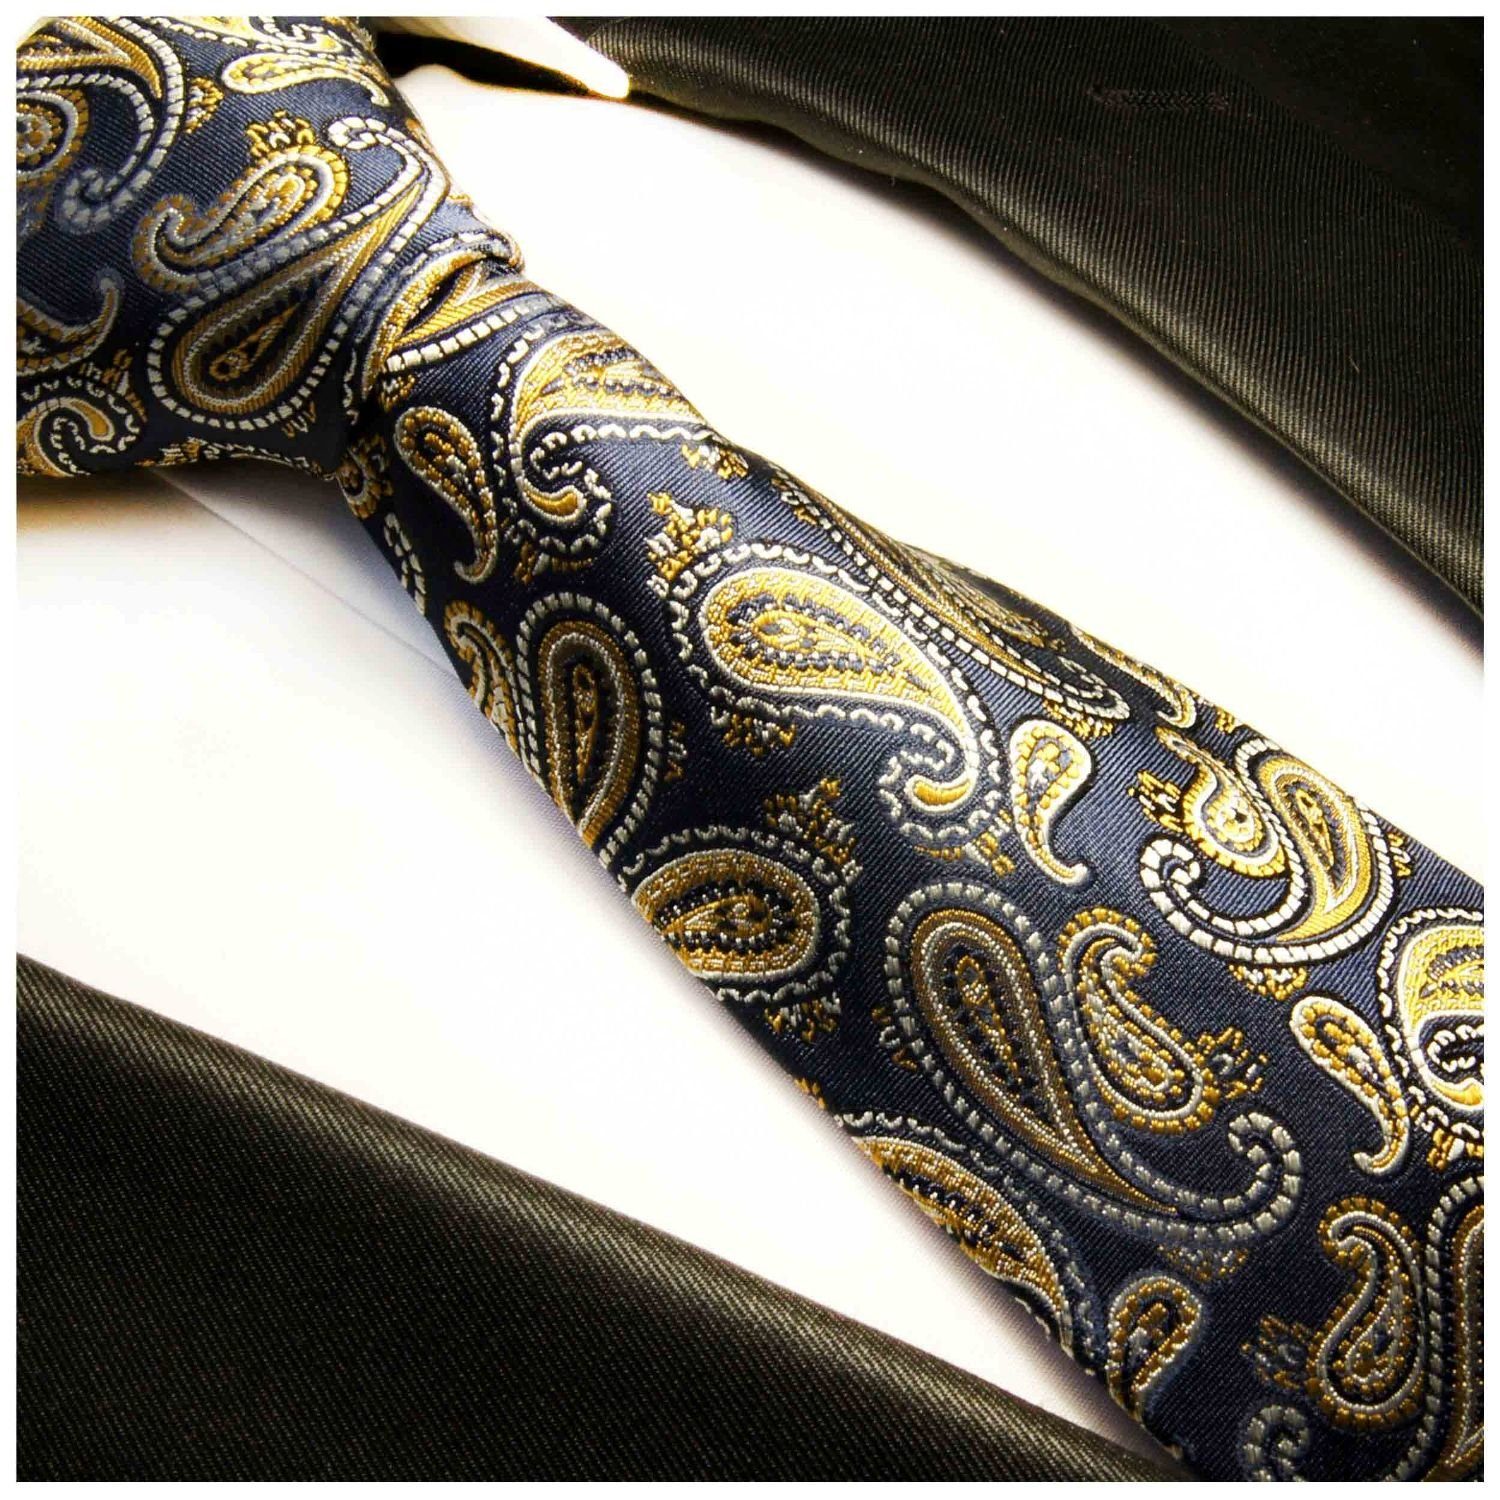 Paul Malone Krawatte paisley Schlips Breit Seidenkrawatte gelb Herren modern blau brokat Seide 365 Elegante (8cm)